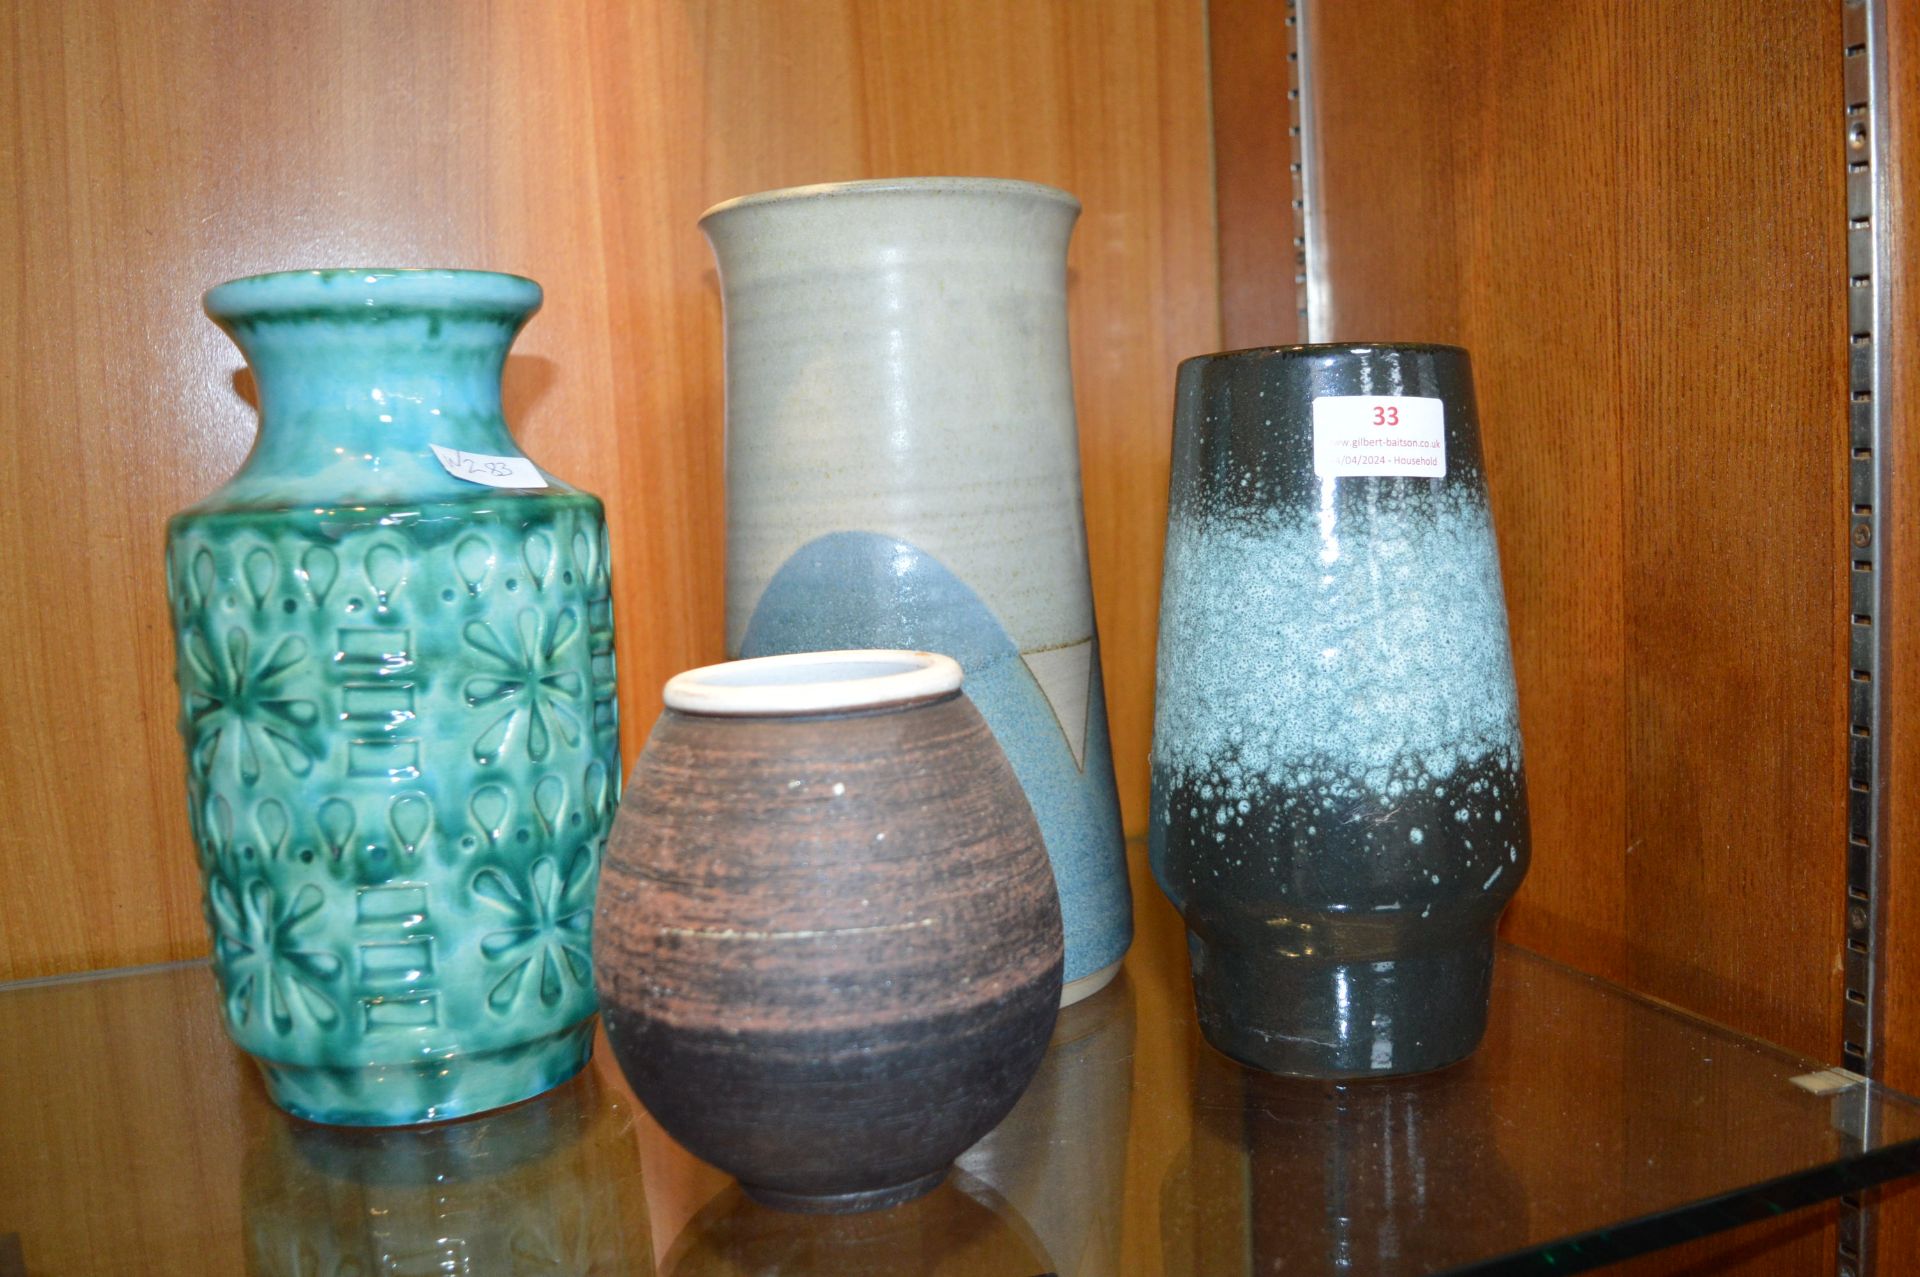 West German and Studio Pottery Vase